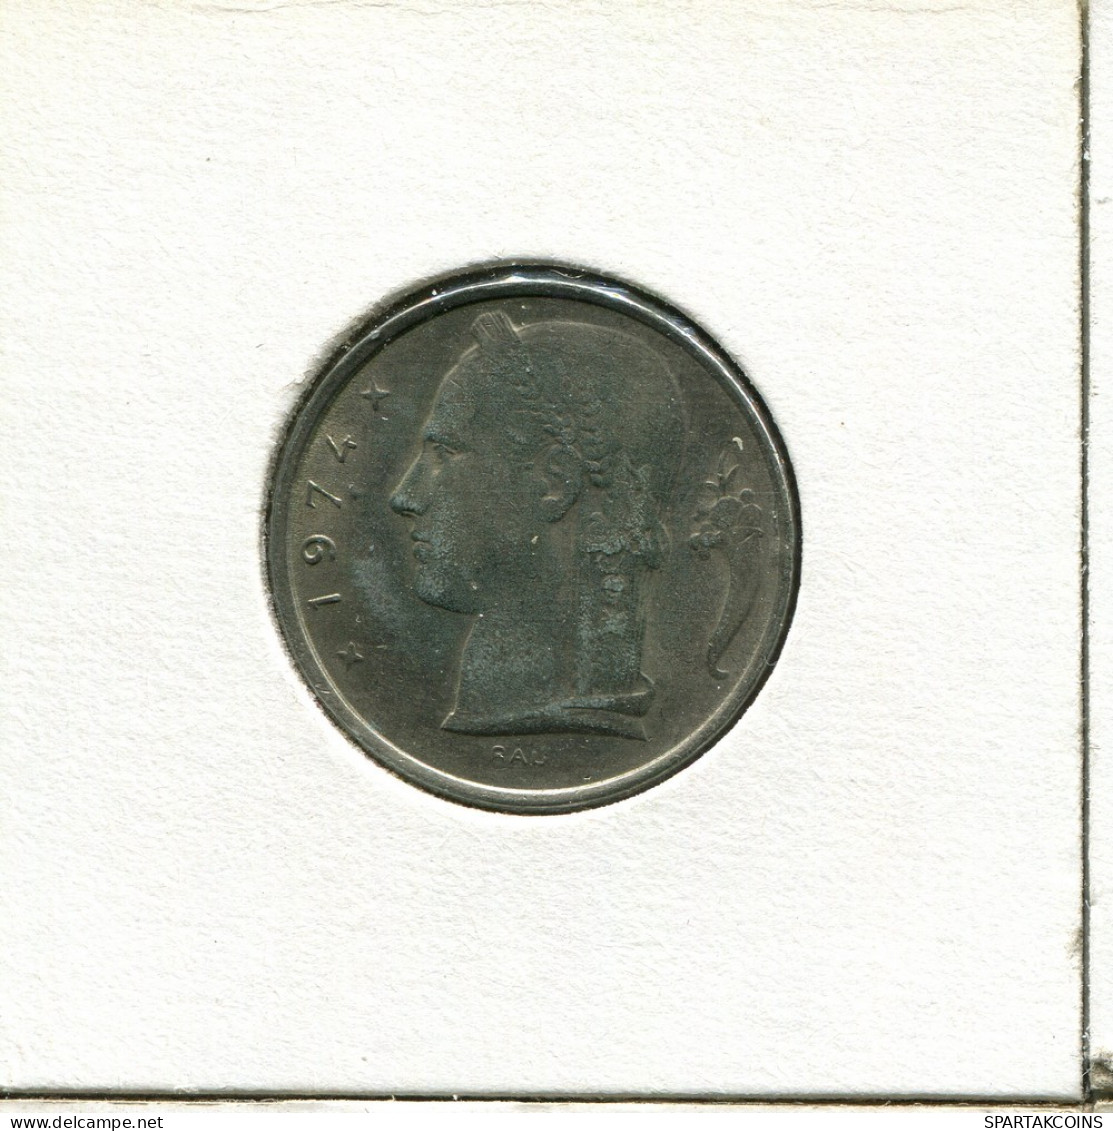 5 FRANCS 1974 FRENCH Text BELGIUM Coin #AU051.U.A - 5 Francs